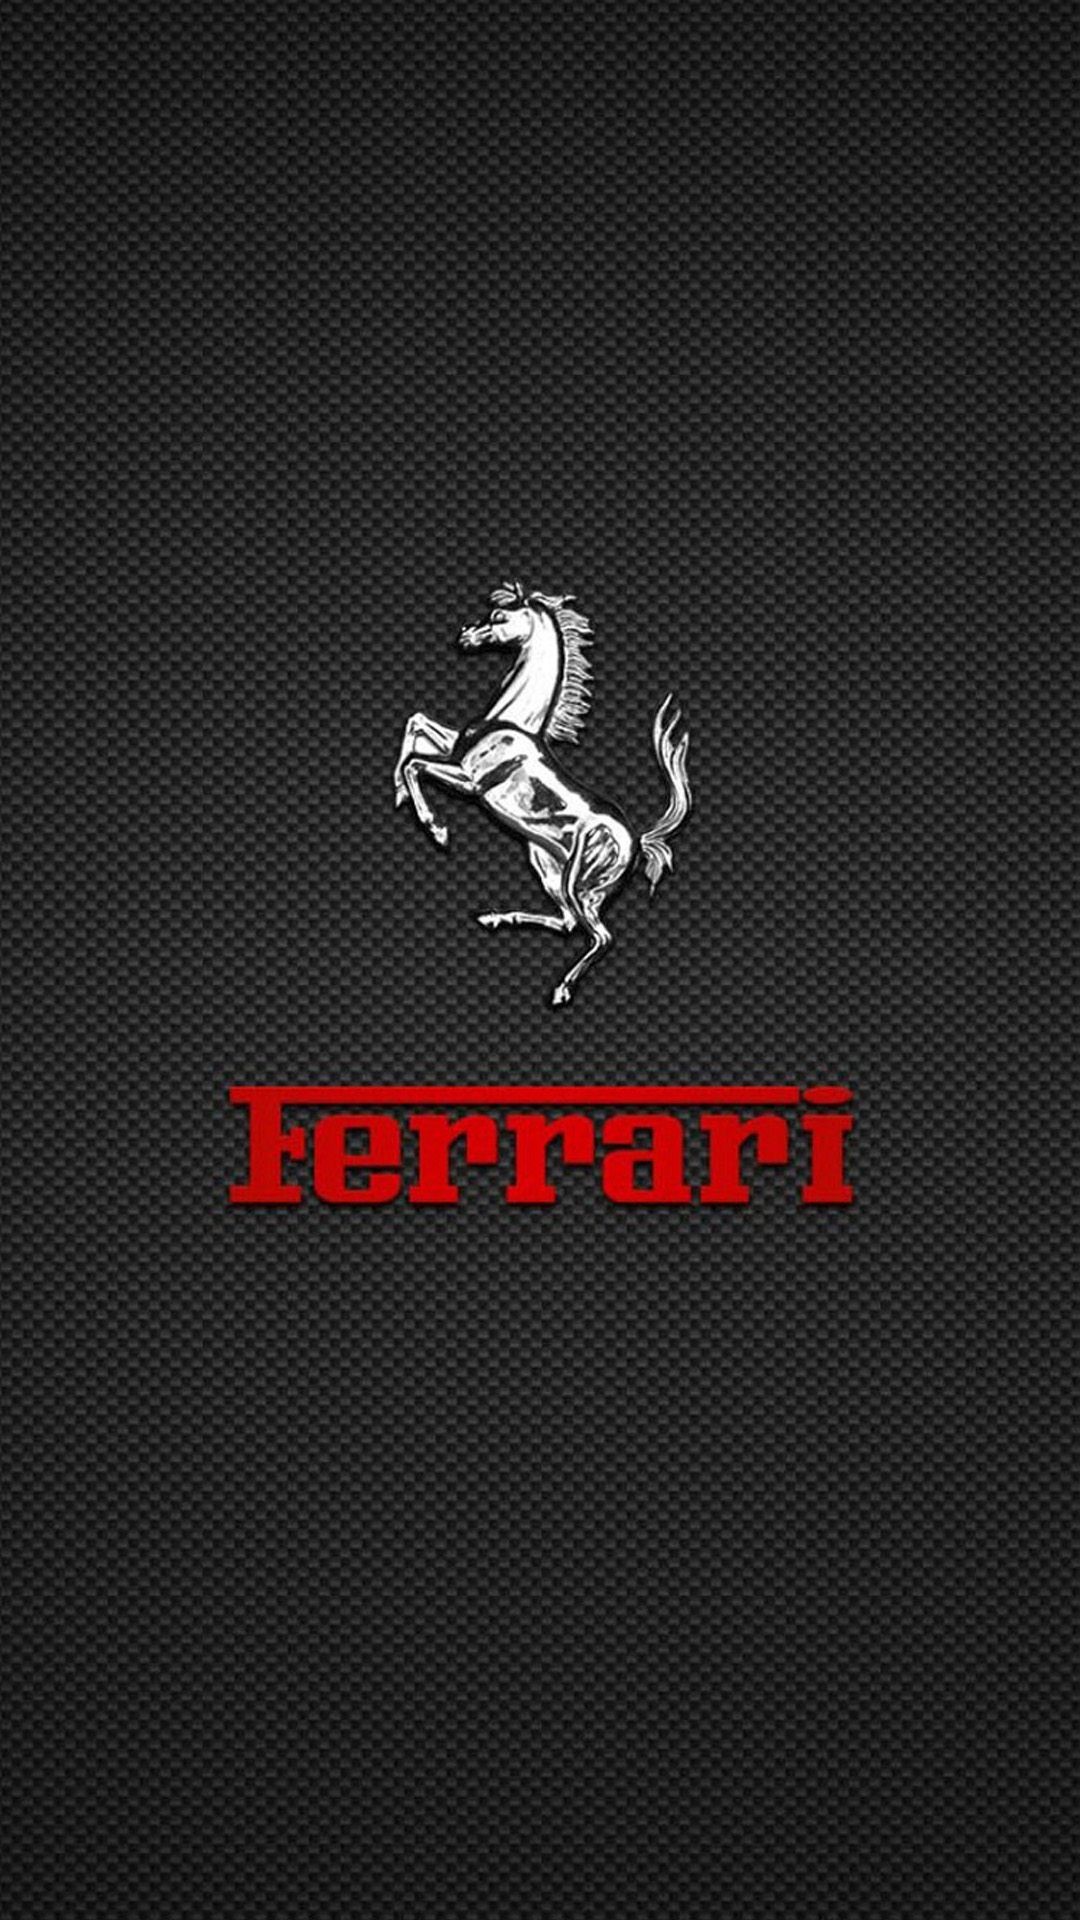 1080x1920 Ferrari Logo Wallpapers for Iphone Iphone 7 plus, Iphone 6 plus wallpapers  for iPhone iPhone 6 plus, iPhone SE, 5 and Retina full HD wallpapers for  iPhone.